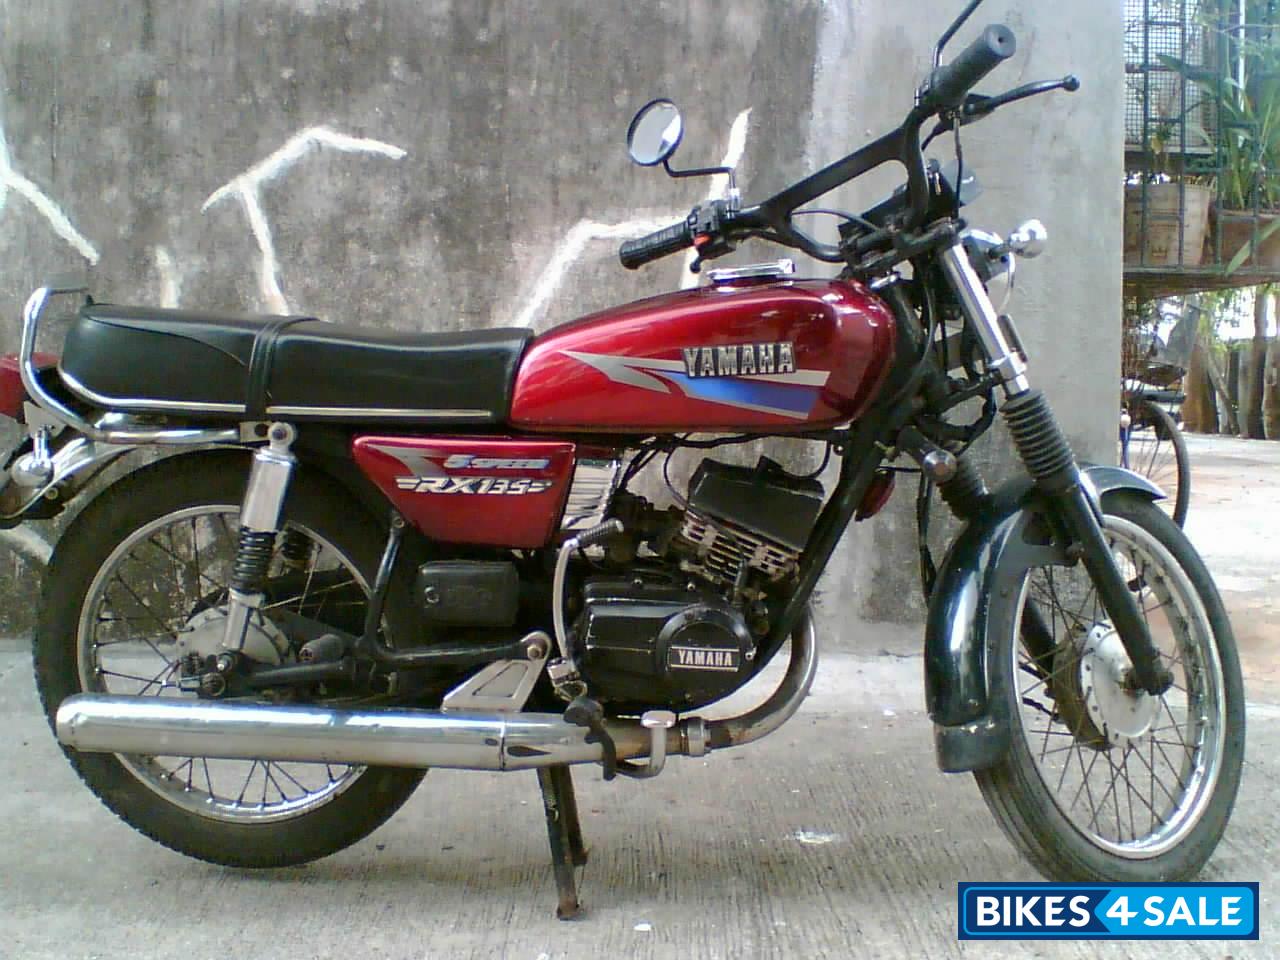 Used 1991 model Yamaha RX 100 for sale in Mumbai. ID 27658. Maroon 